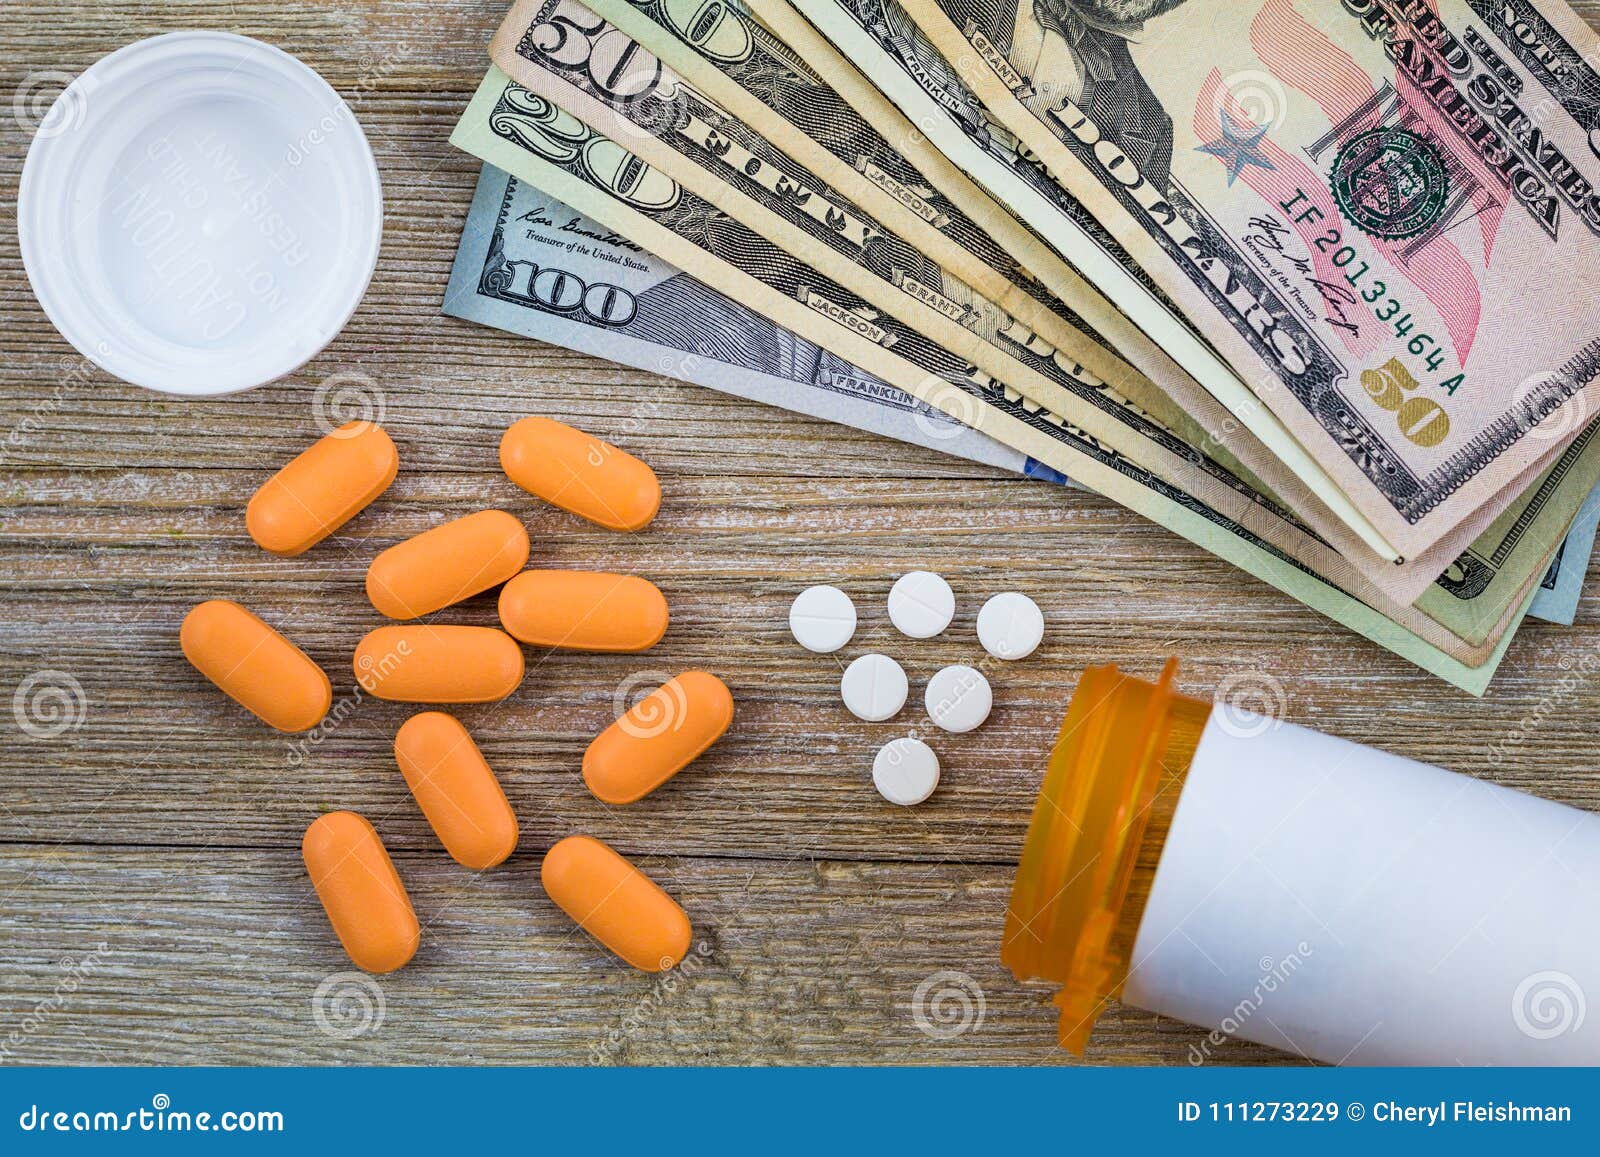 prescription medicine on dollars for pharmaceutical industry concept